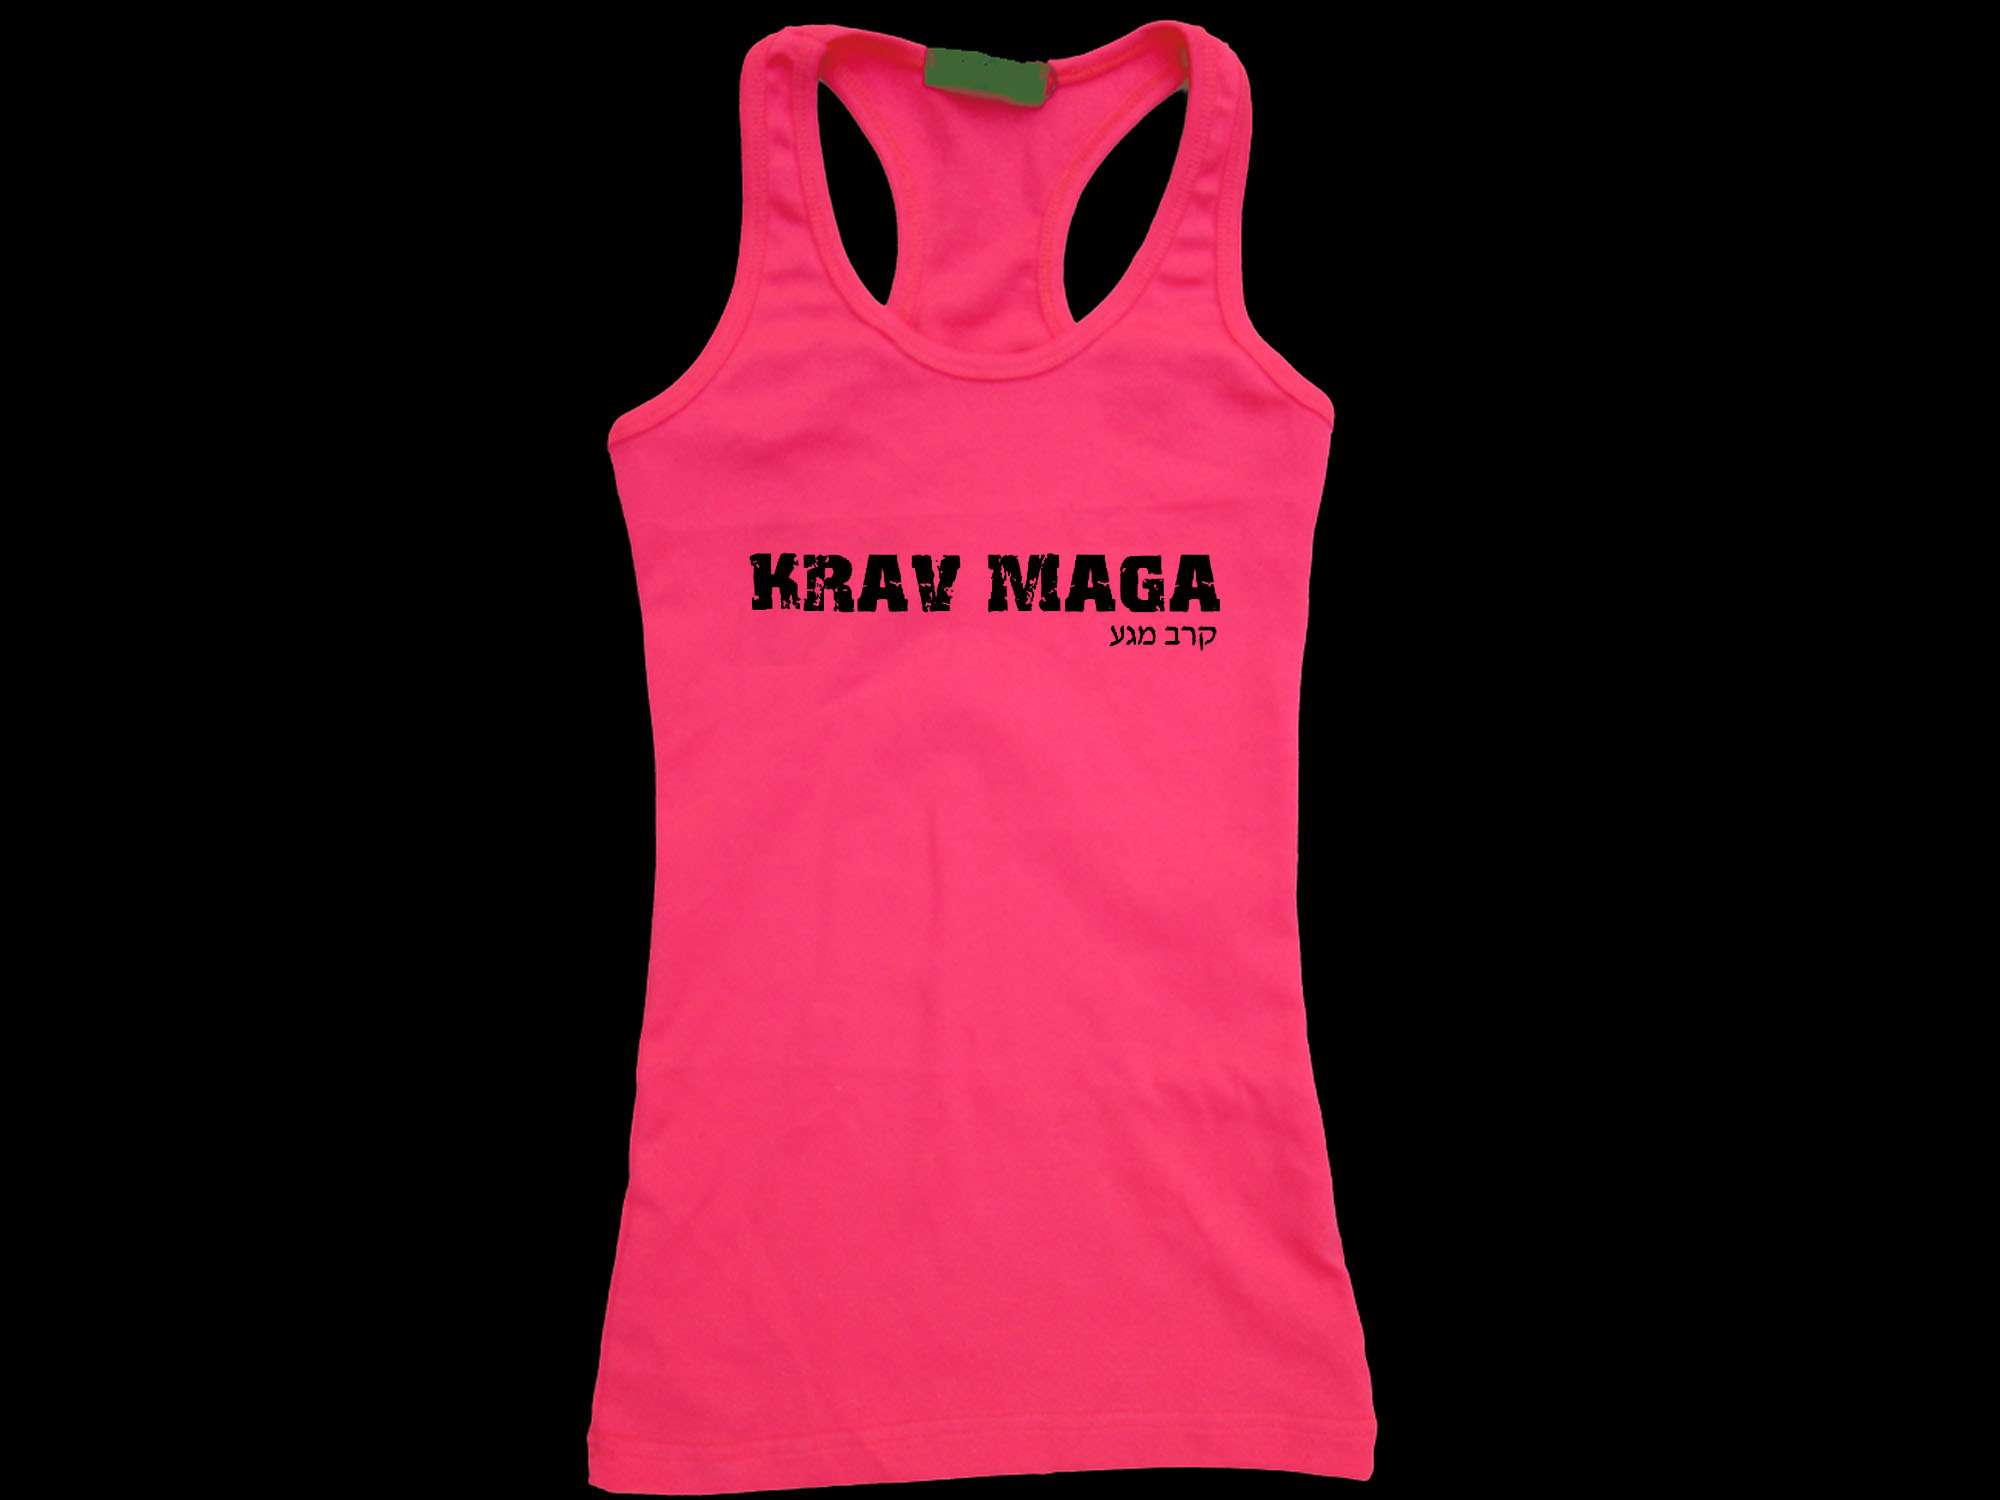 Krav maga women women/junior pink tank top S/M c